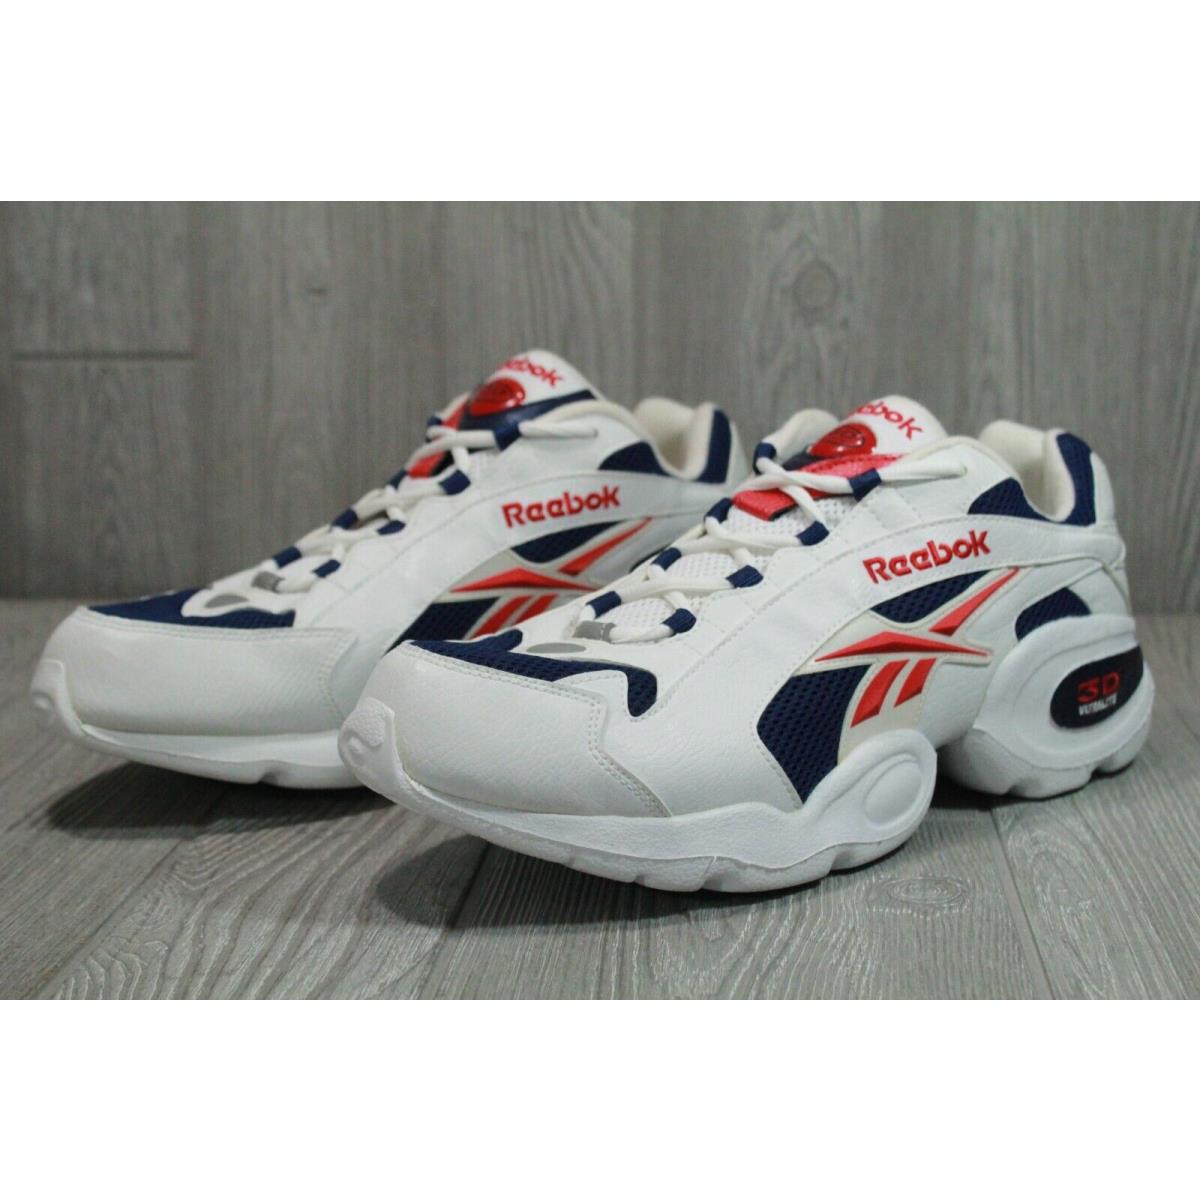 Reebok Electrolyte II Late Running Shoes Mens Size 13 023836585466 - Reebok shoes Electrolyte - White SporTipTop